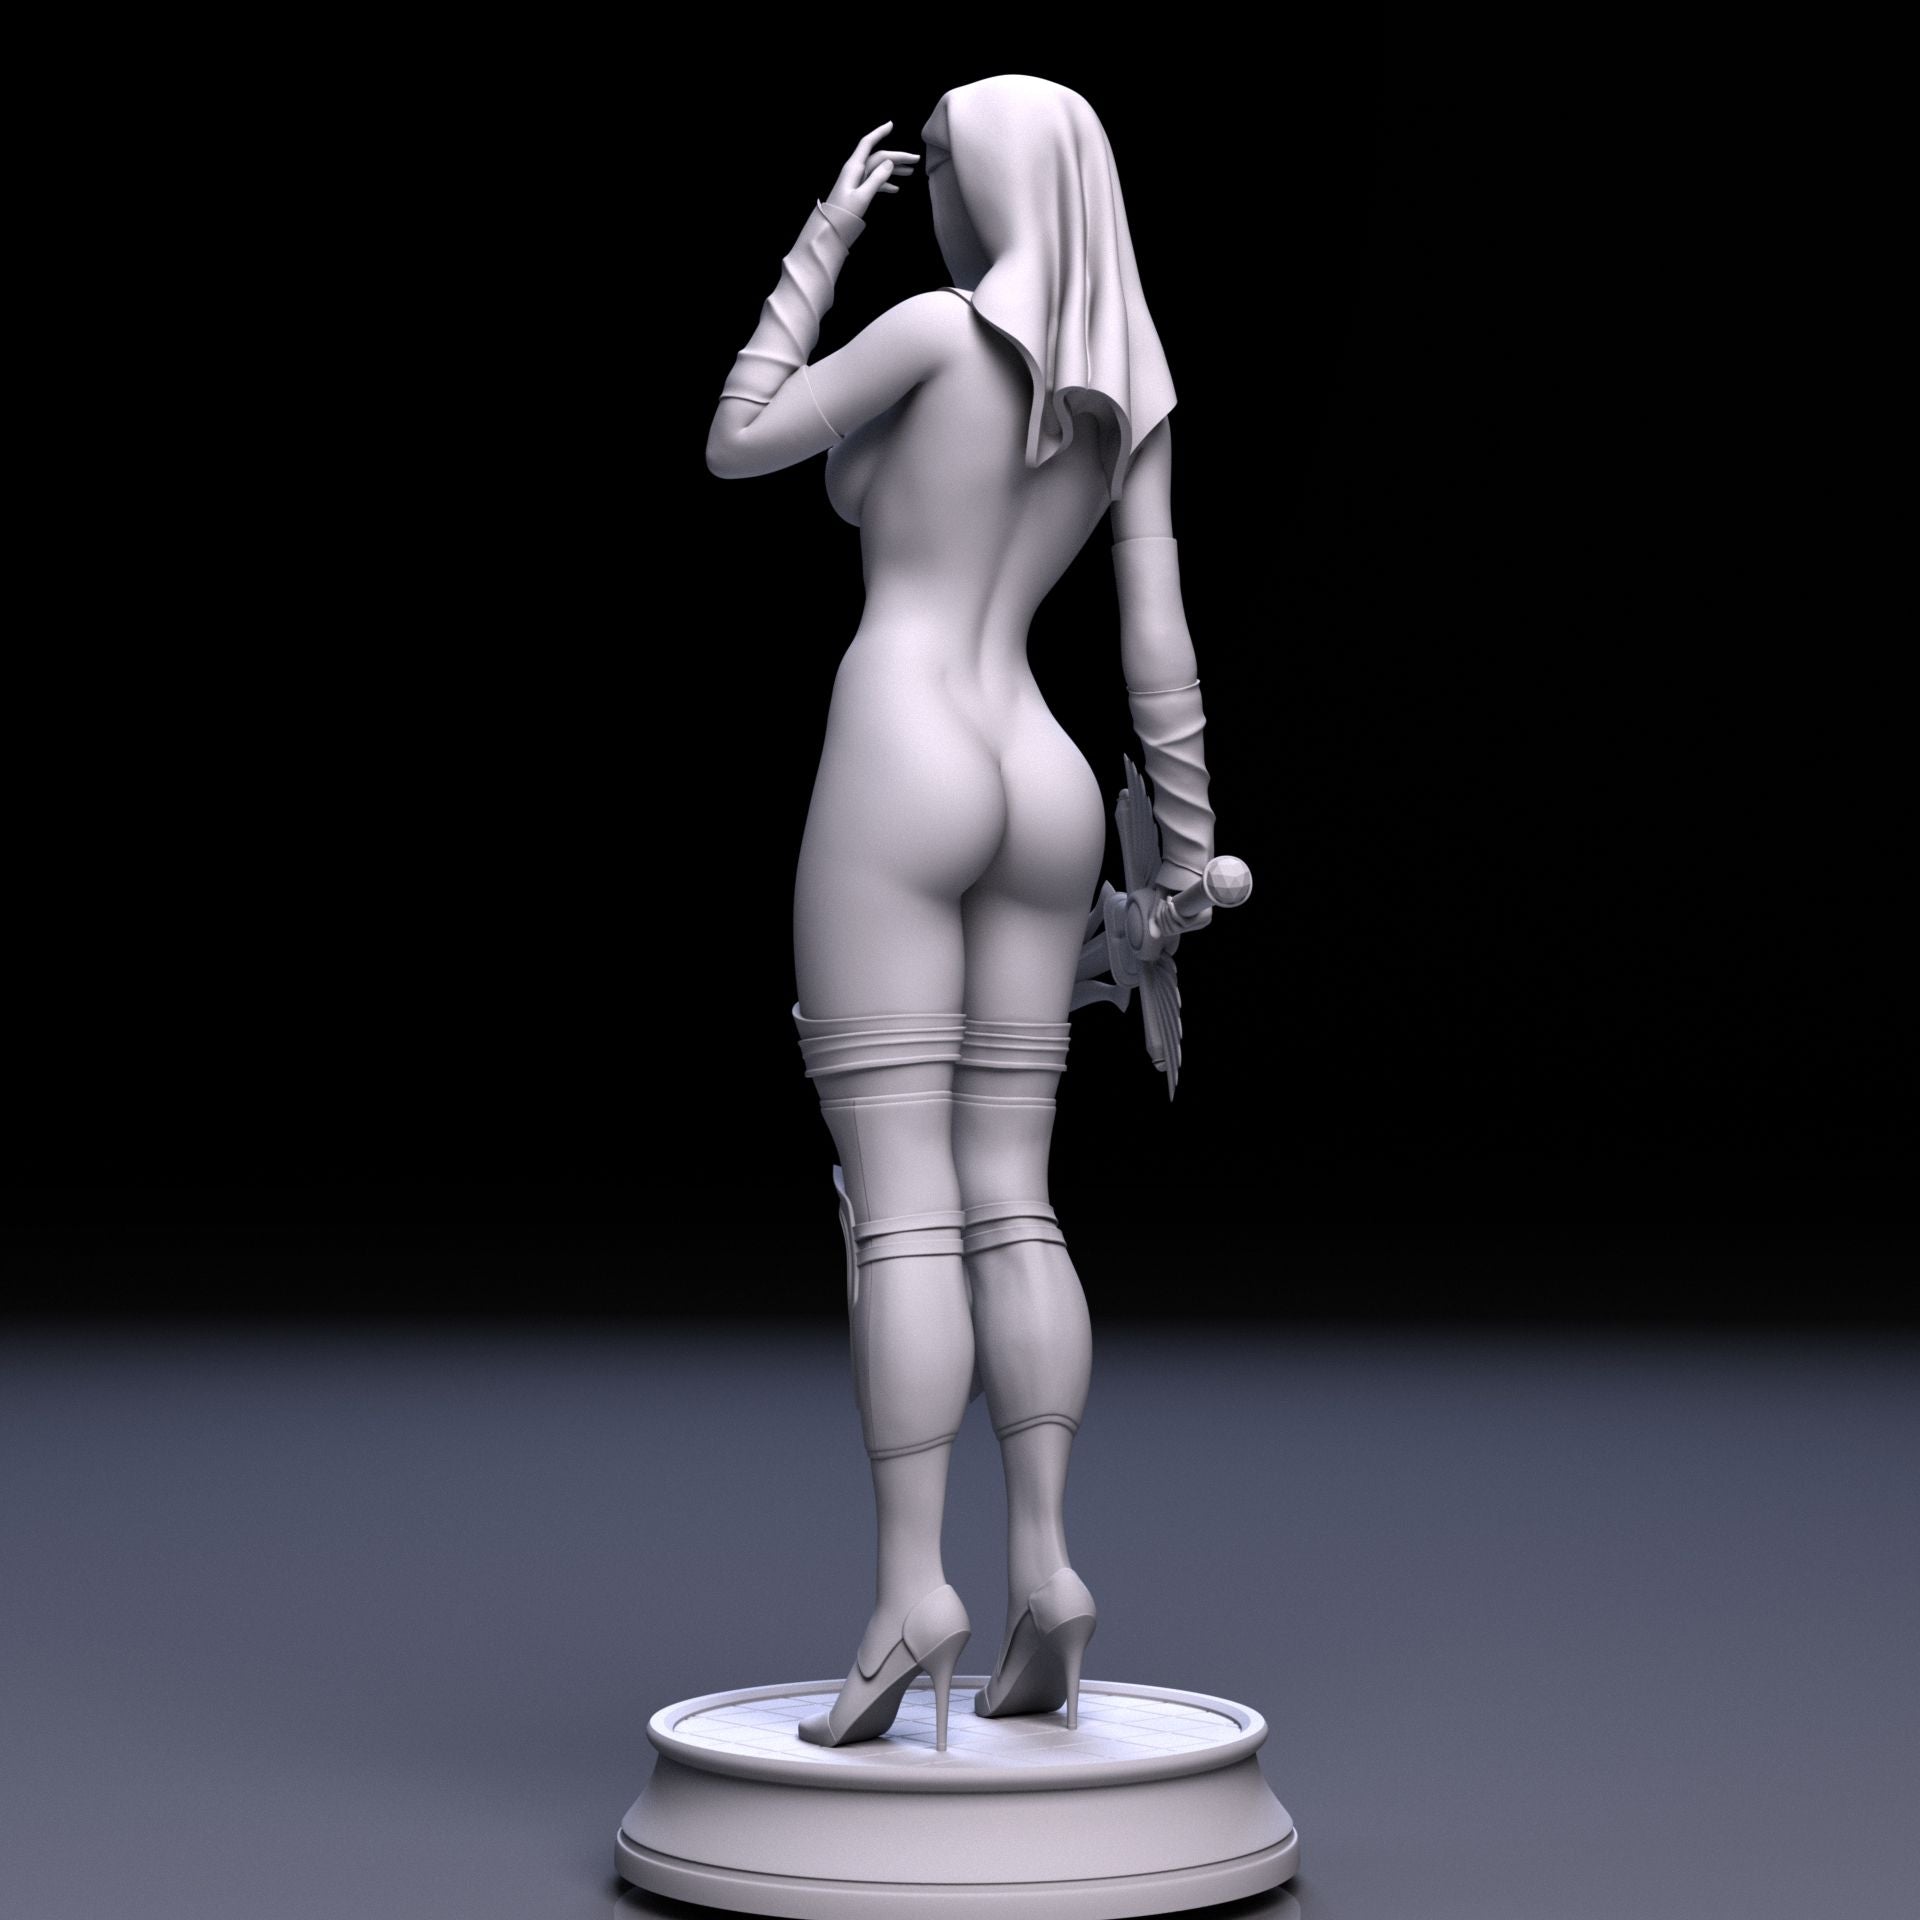 Naughty Nun | 3D Printed | Fanart | Unpainted | NSFW Version | Figurine | Figure | Miniature | Sexy |